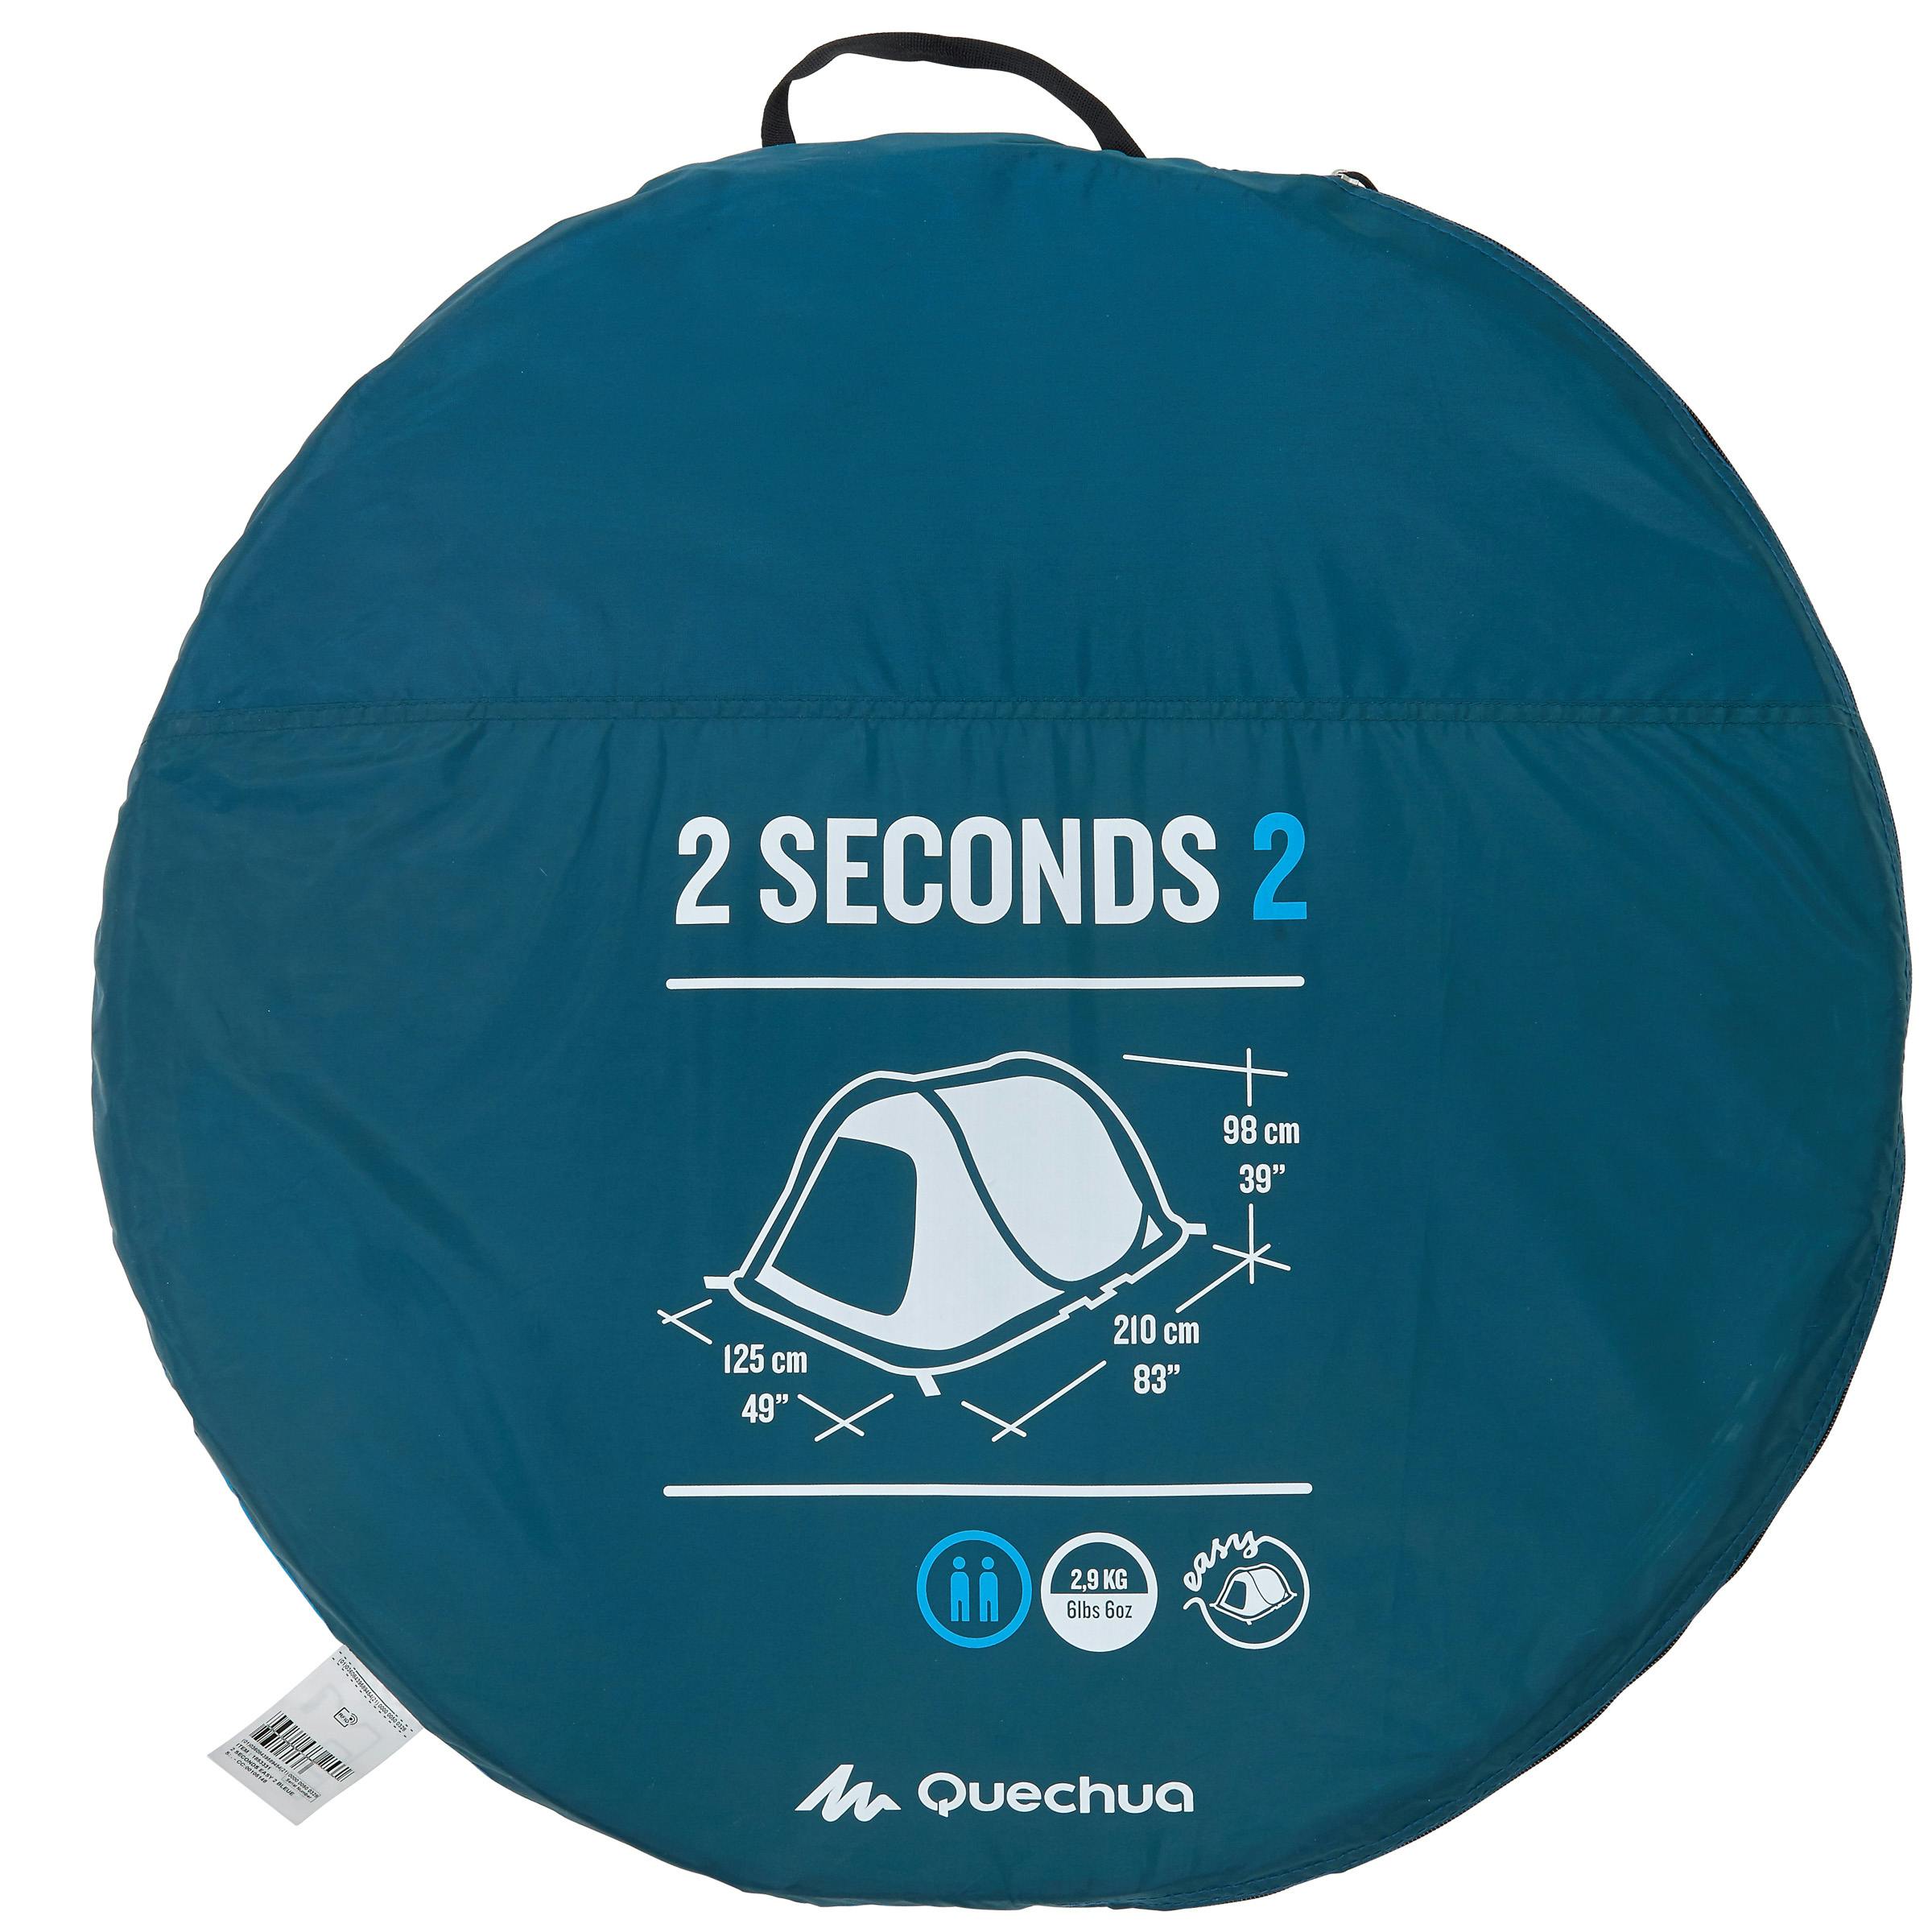 Decathlon 2 Seconds 2 Tent | Curated.com